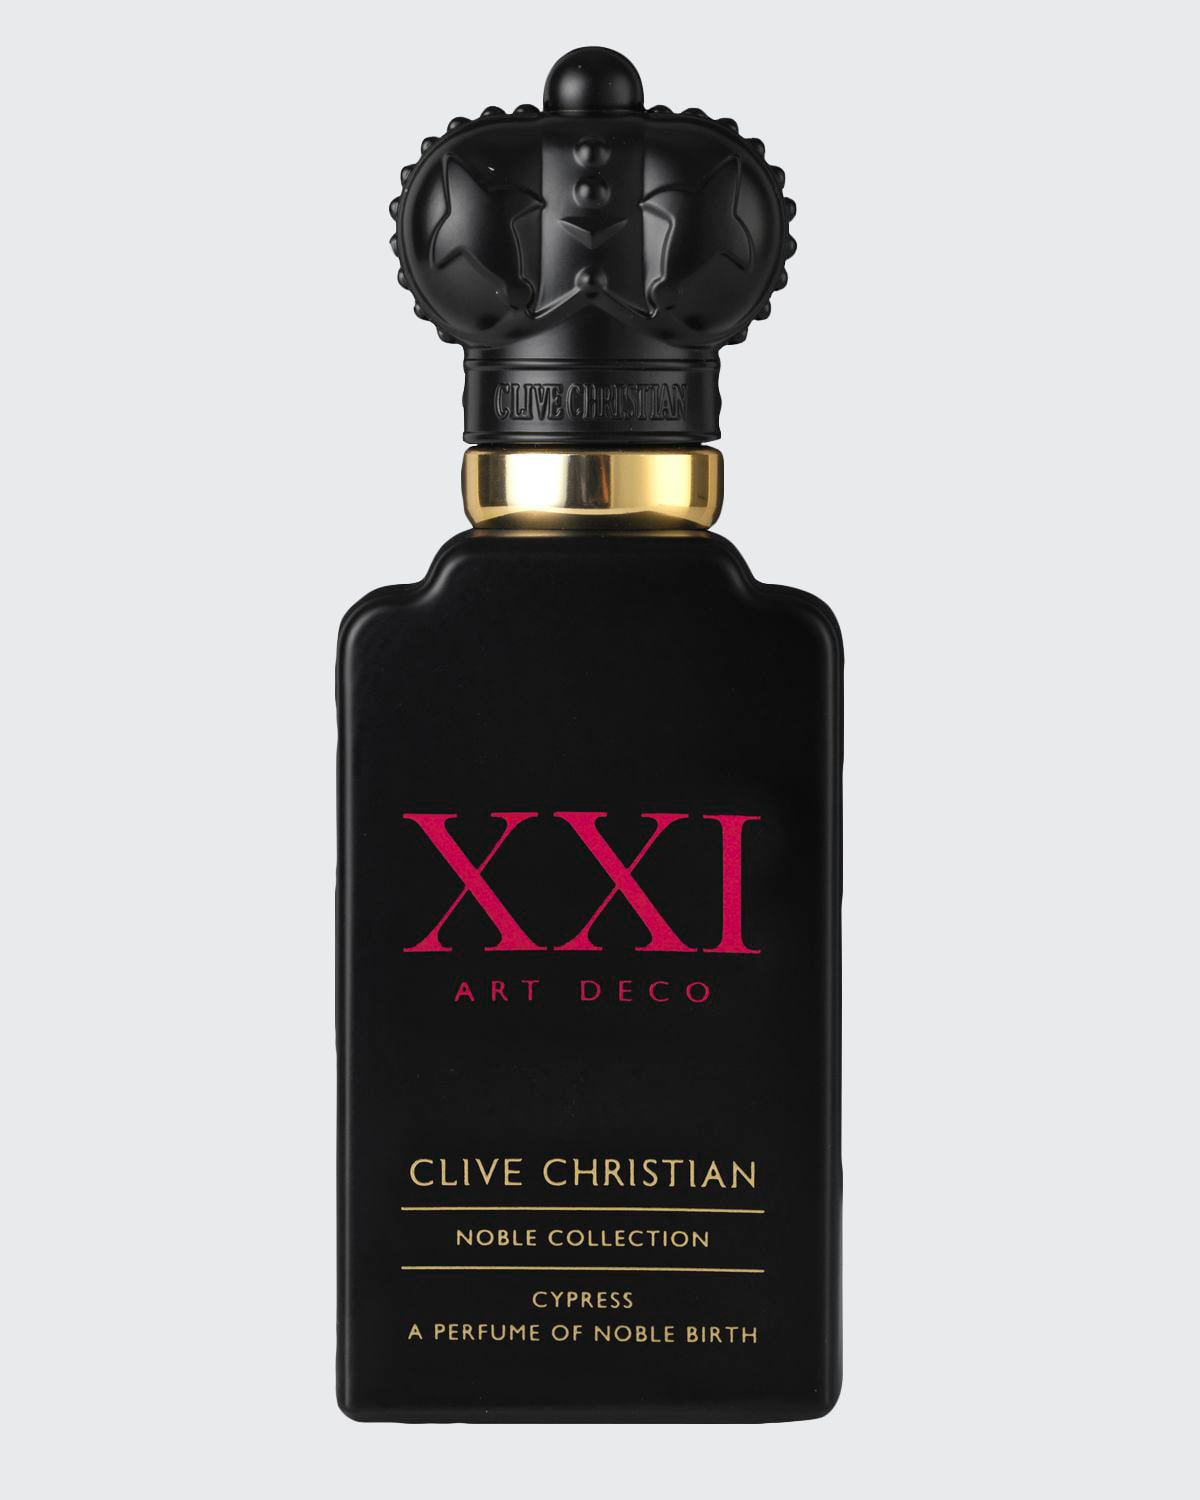 Clive Christian Noble Collection XXI Art Deco: Cypress Perfume Spray, 1.7 oz.